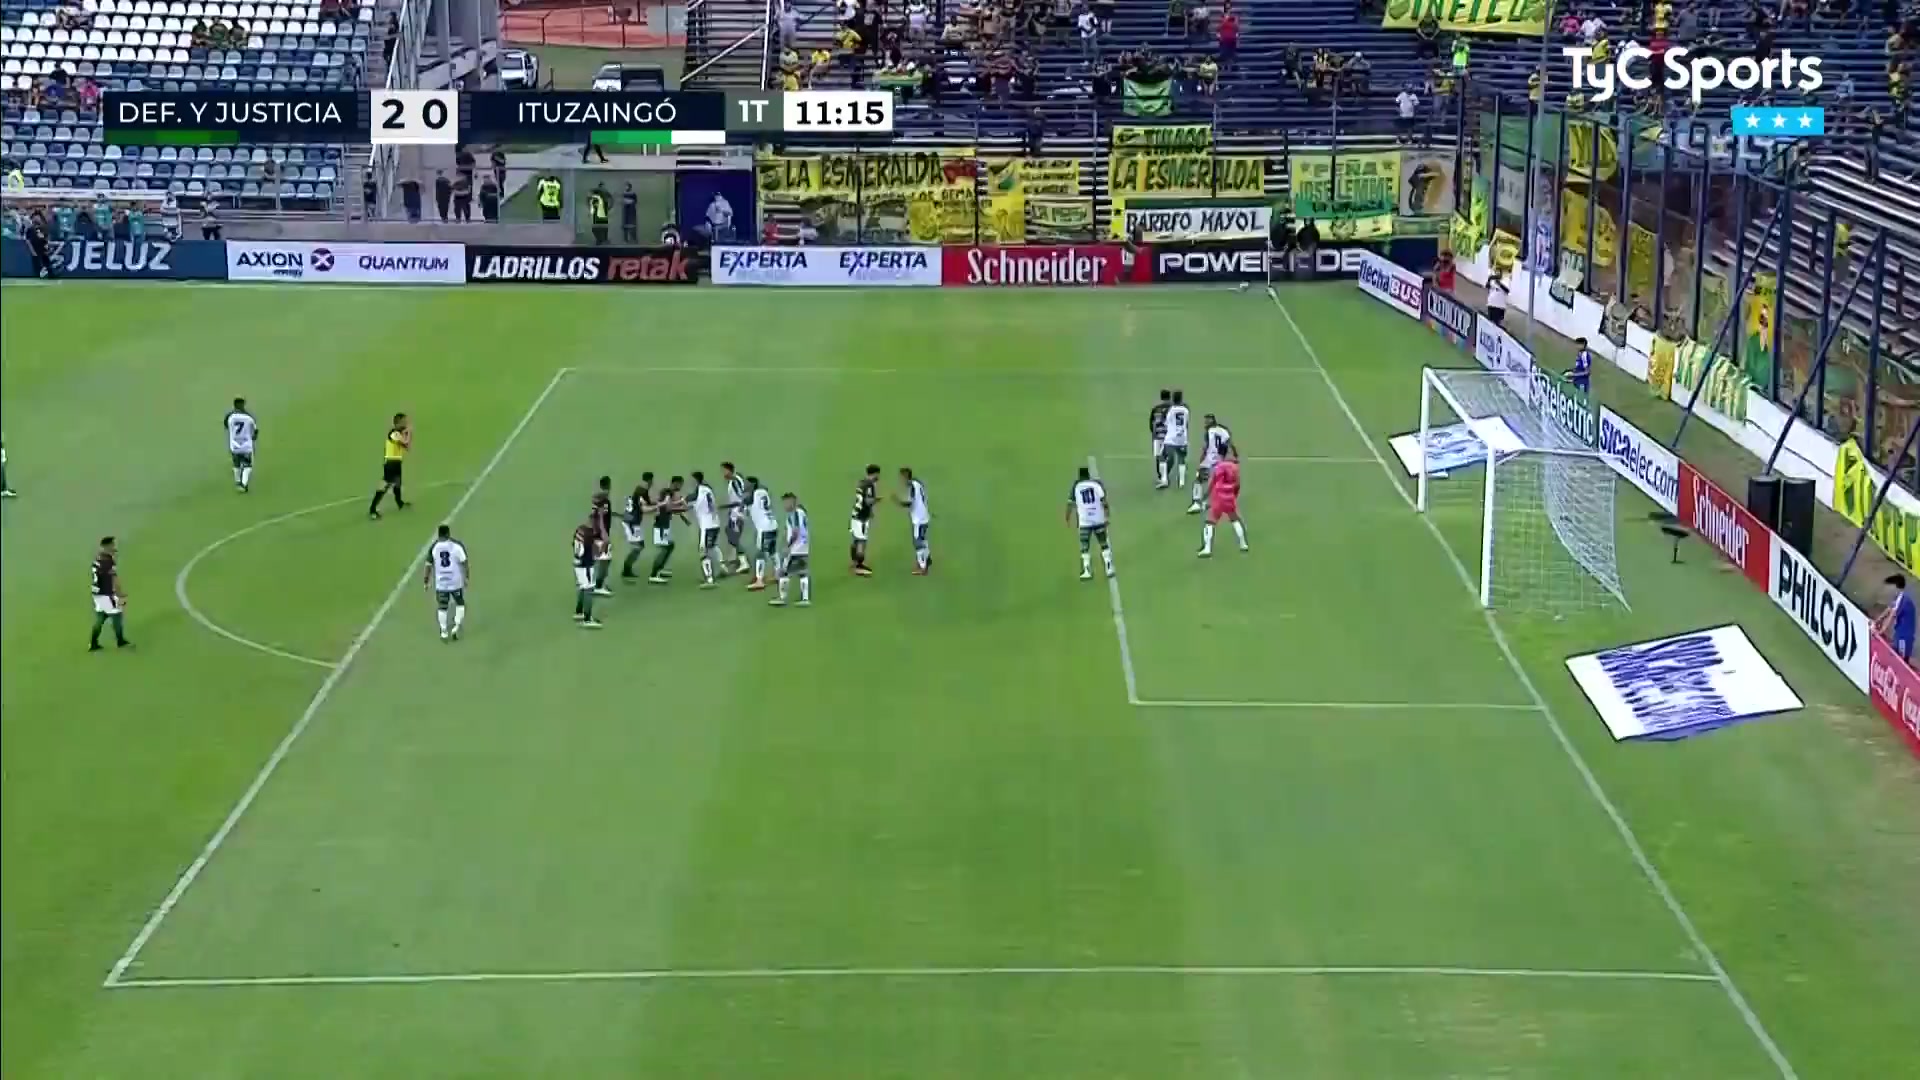 ARG C Defensa Y Justicia Vs Ituzaingo  Goal in 11 min, Score 2:0